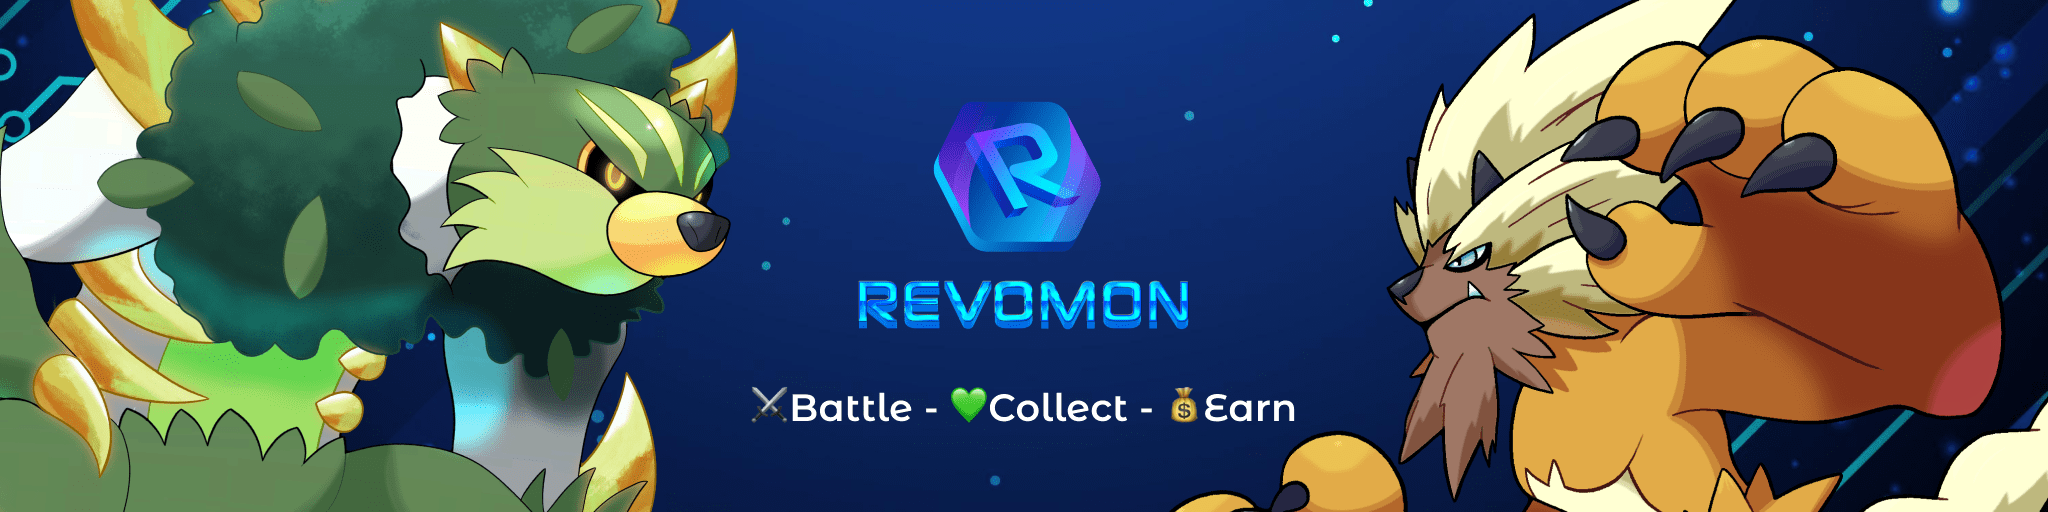 Two Pokémon VR Revomon avatars on a poster